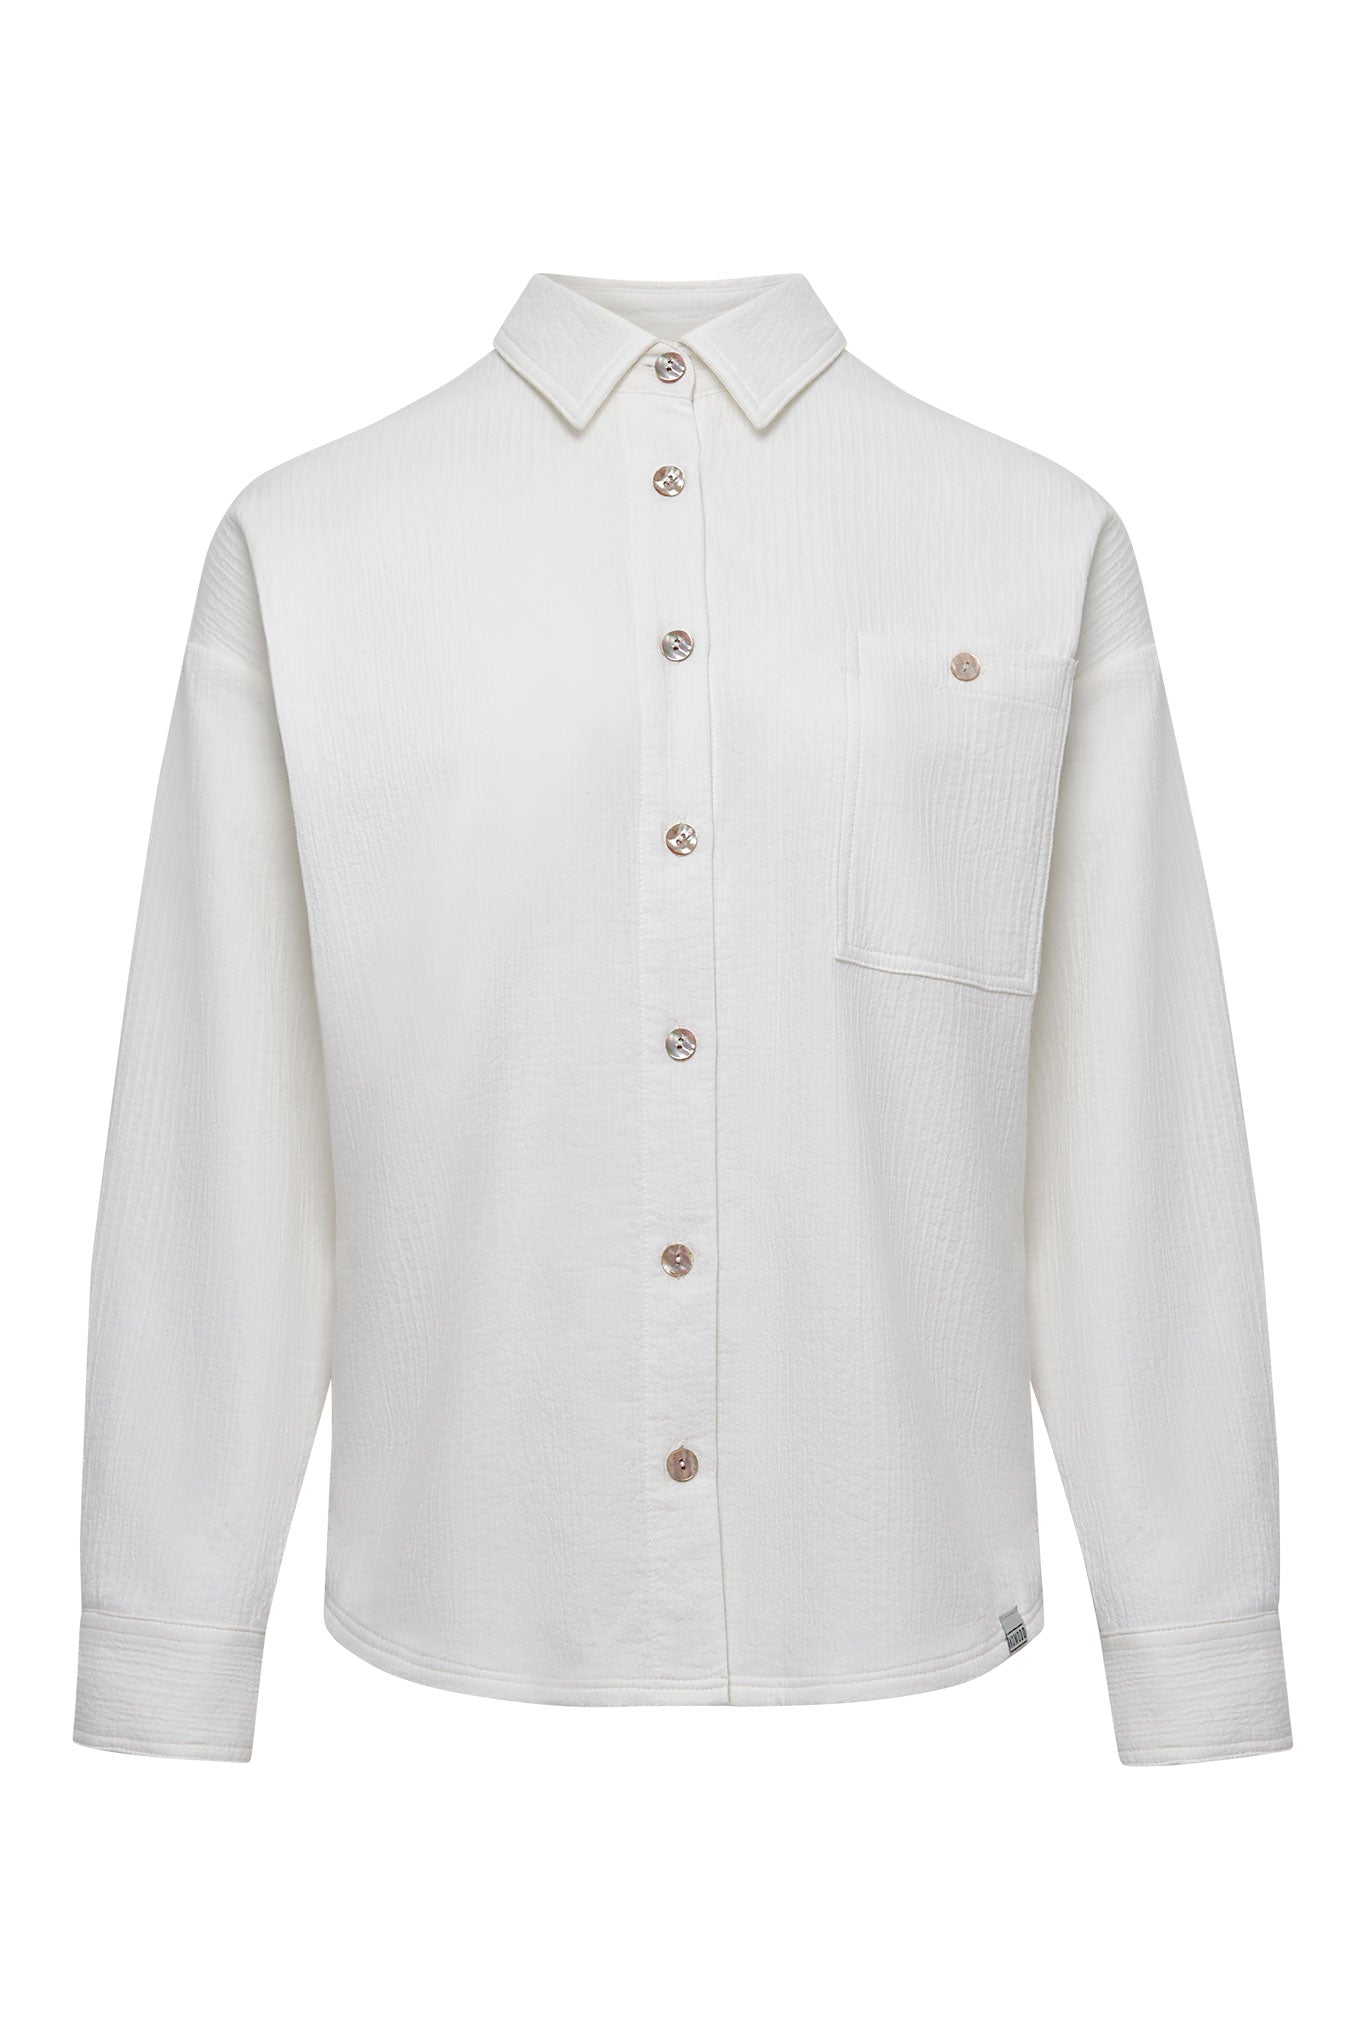 White, long-sleeved HANAKO shirt made from 100% organic cotton from Komodo